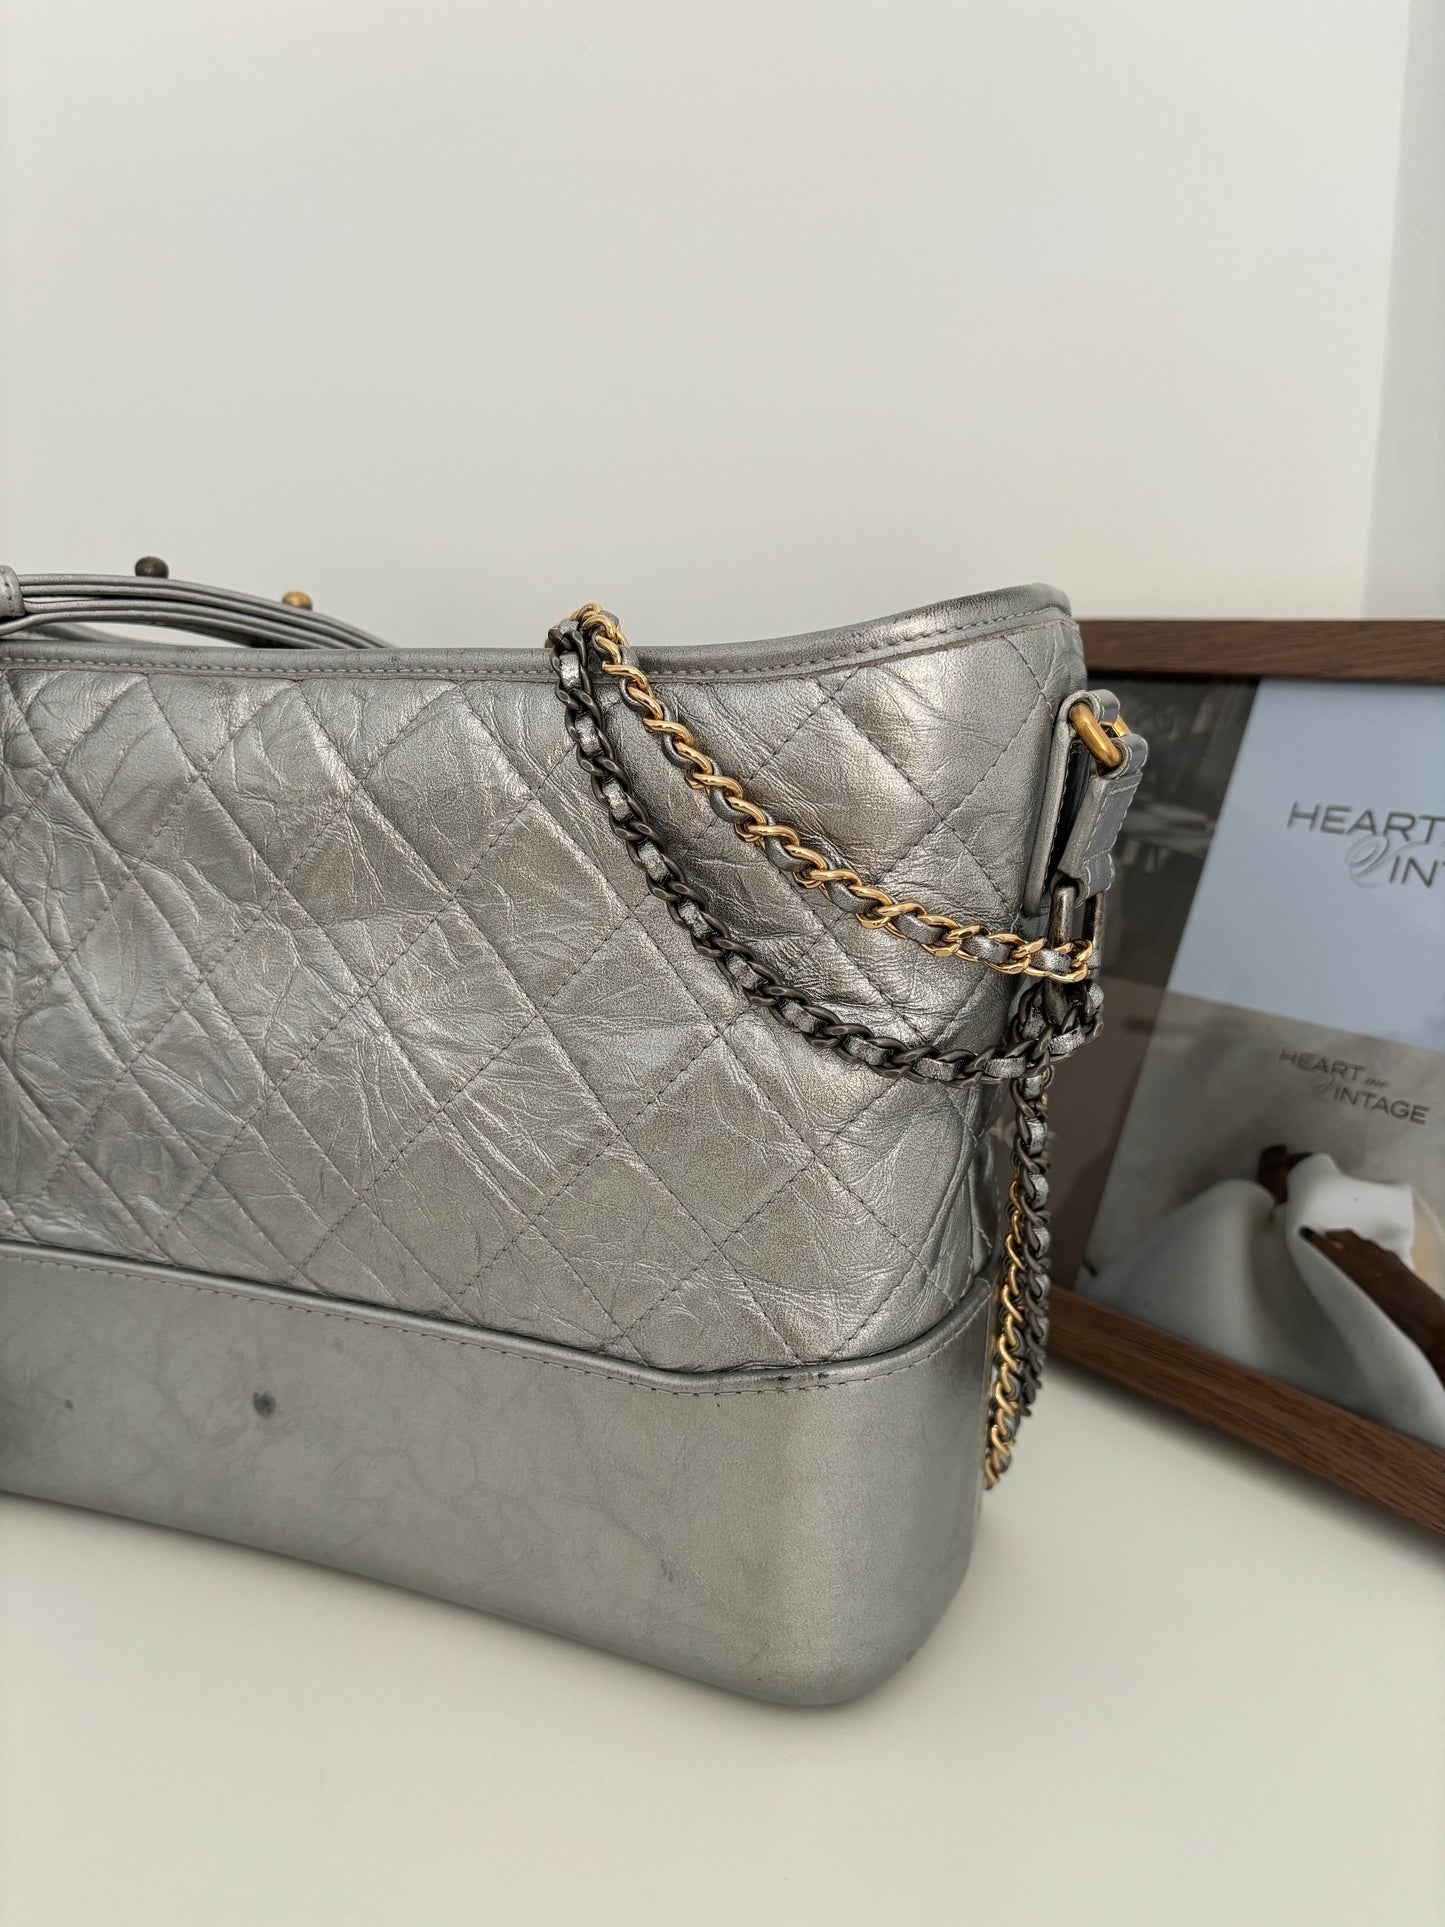 Chanel Gabrielle Old Medium in Metallic Silver Calfskin